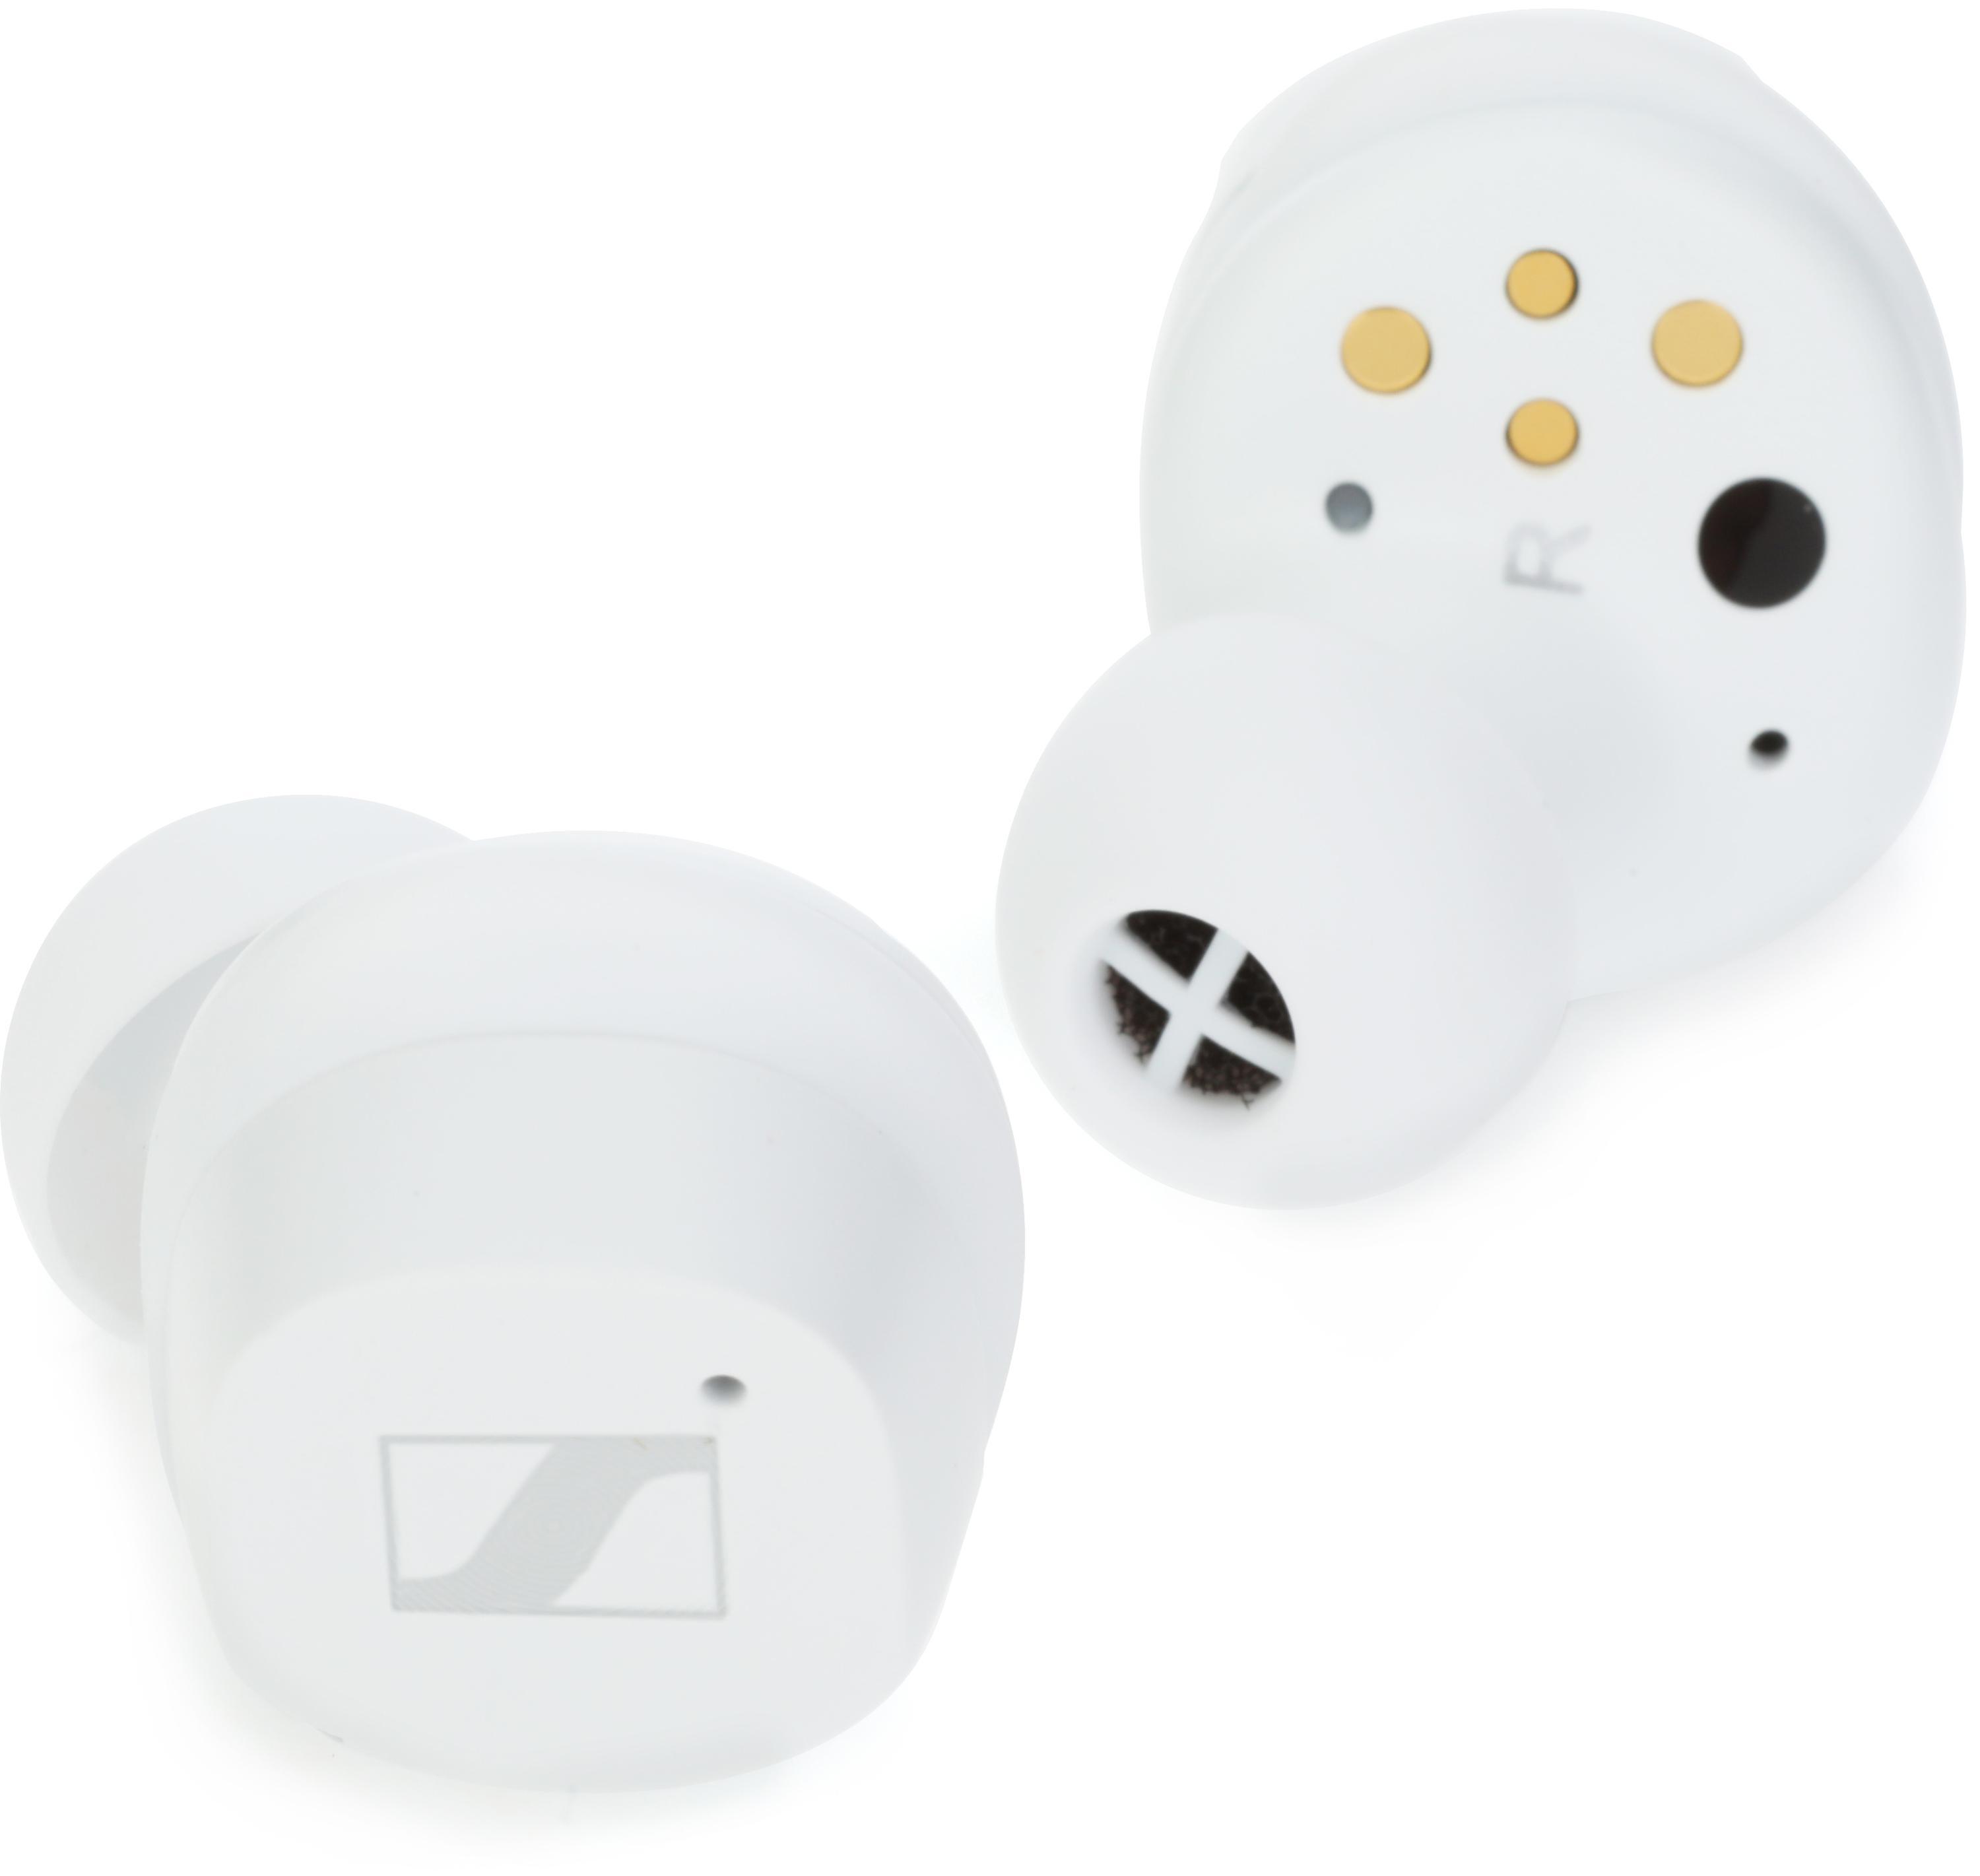 Sennheiser Momentum True Wireless 3 Earbuds - White